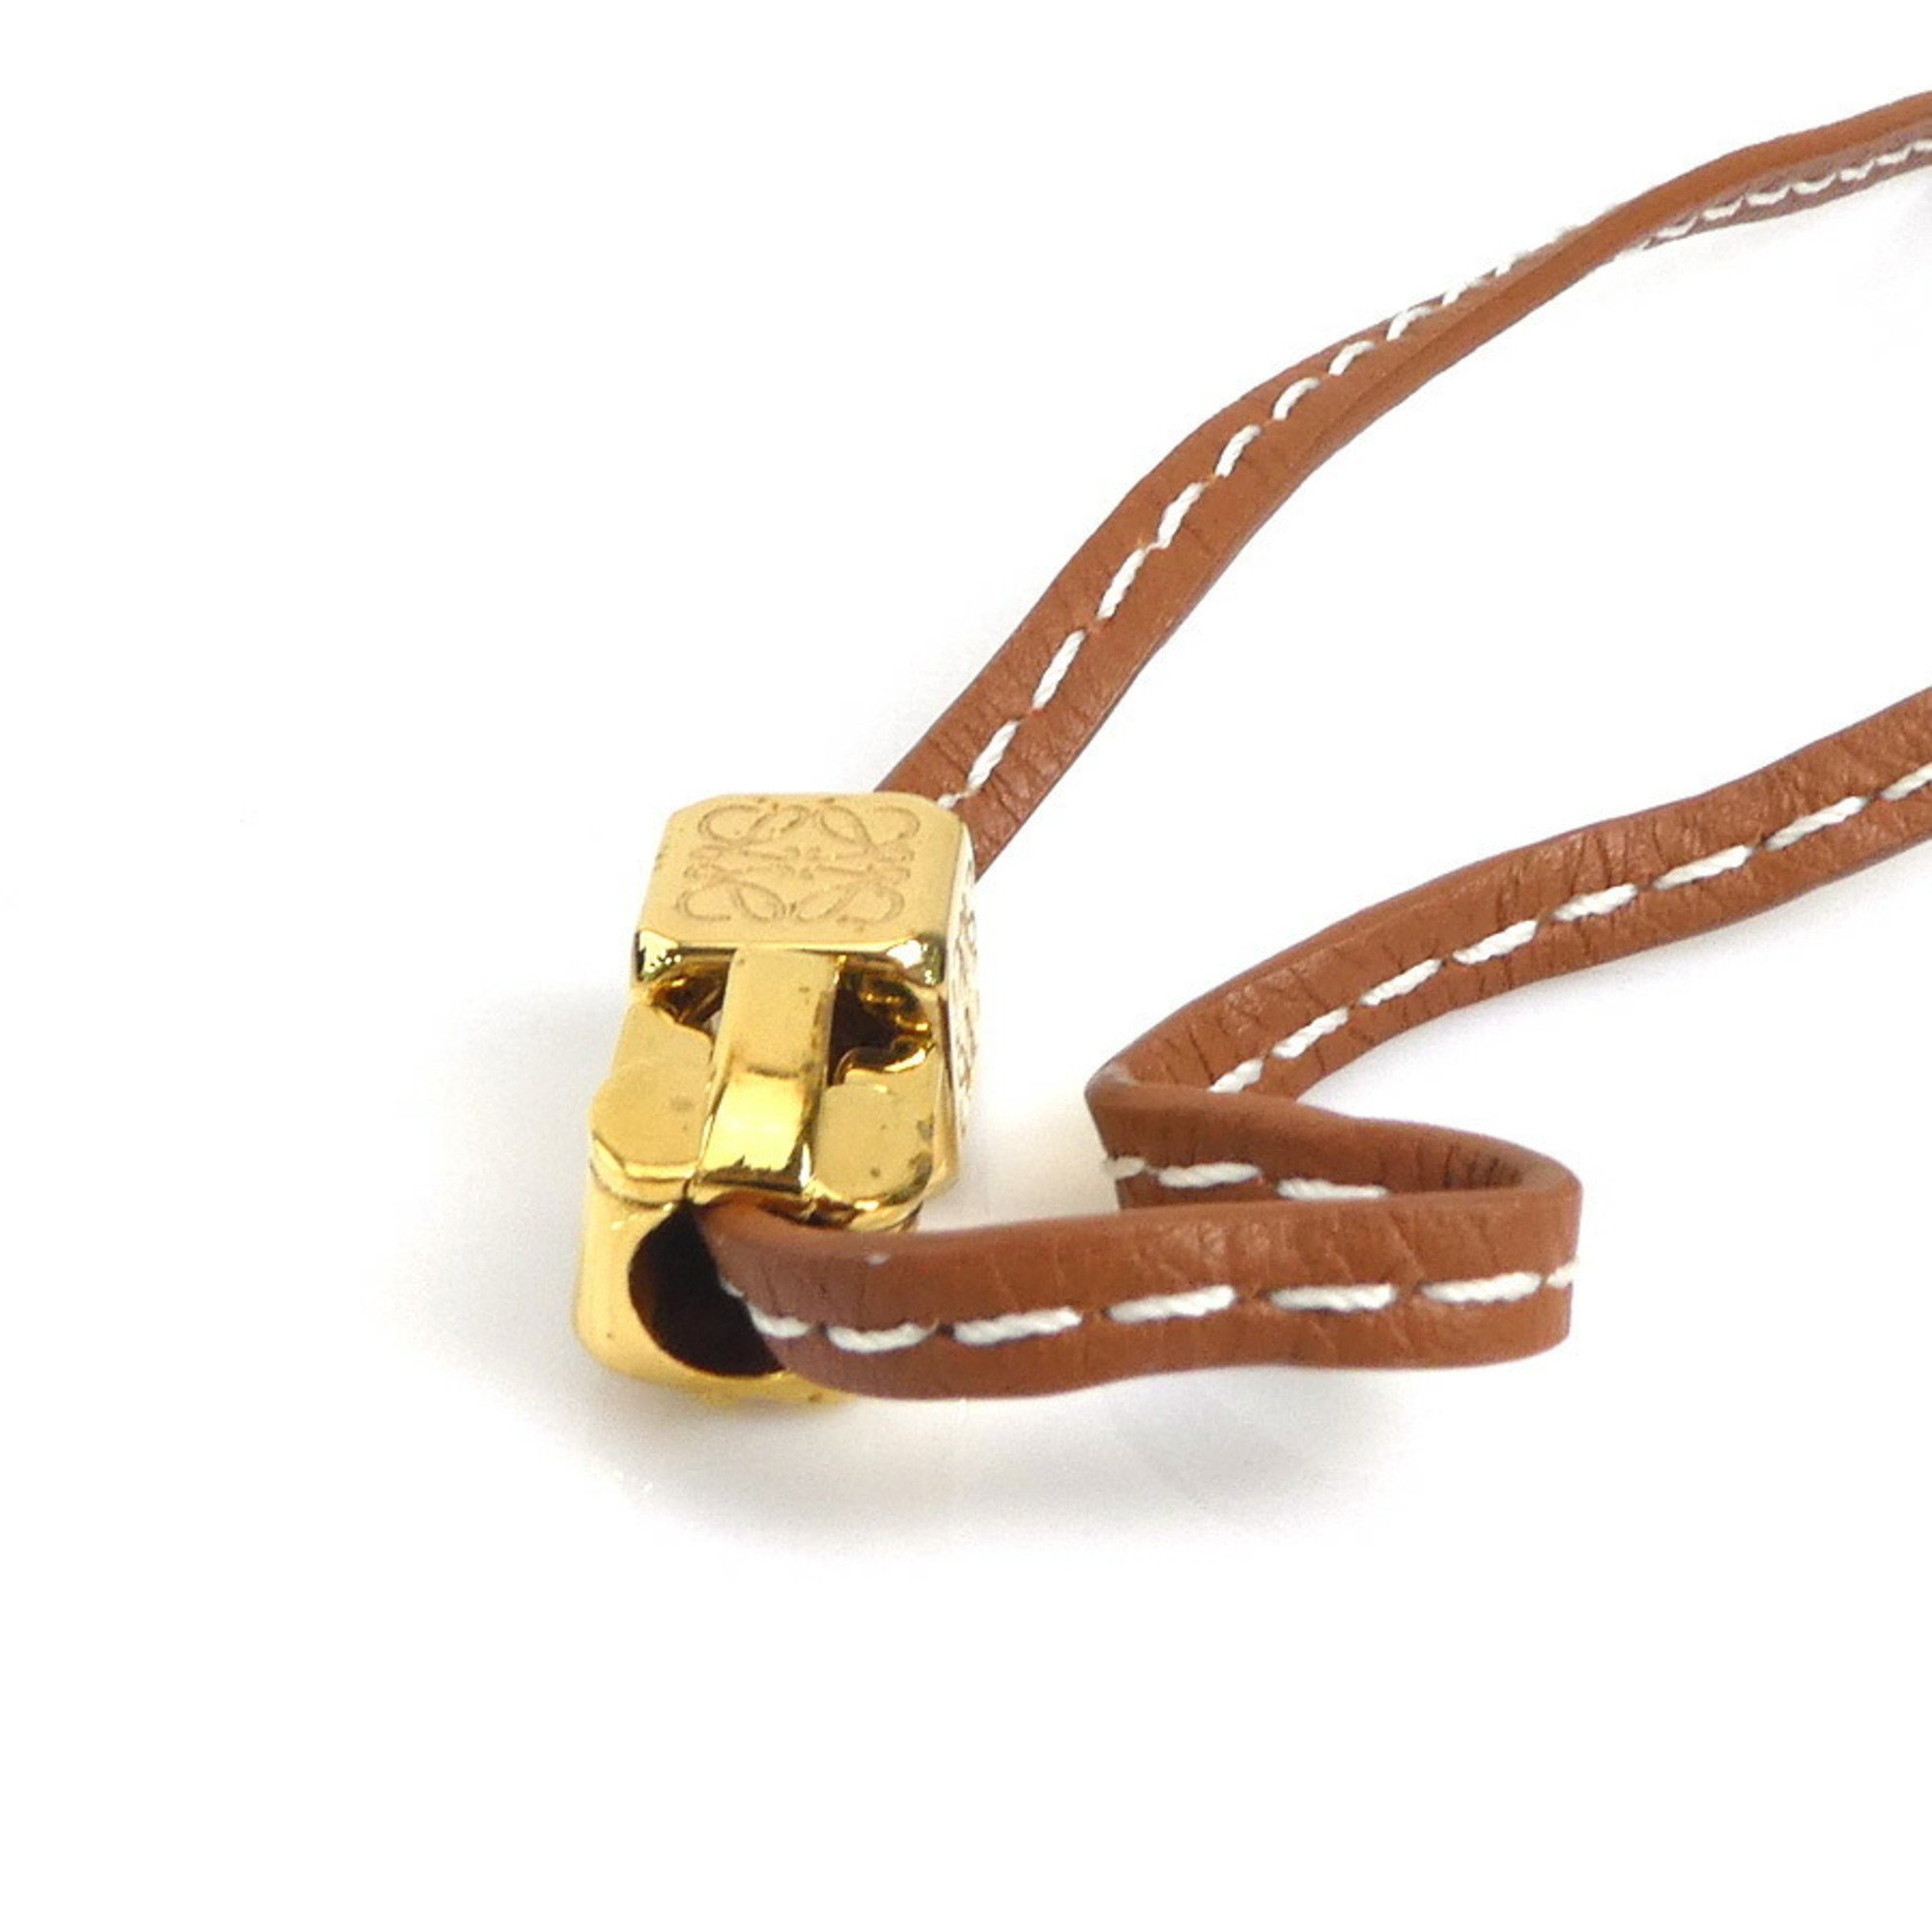 LOEWE Necklace Leather/Metal Brown Unisex